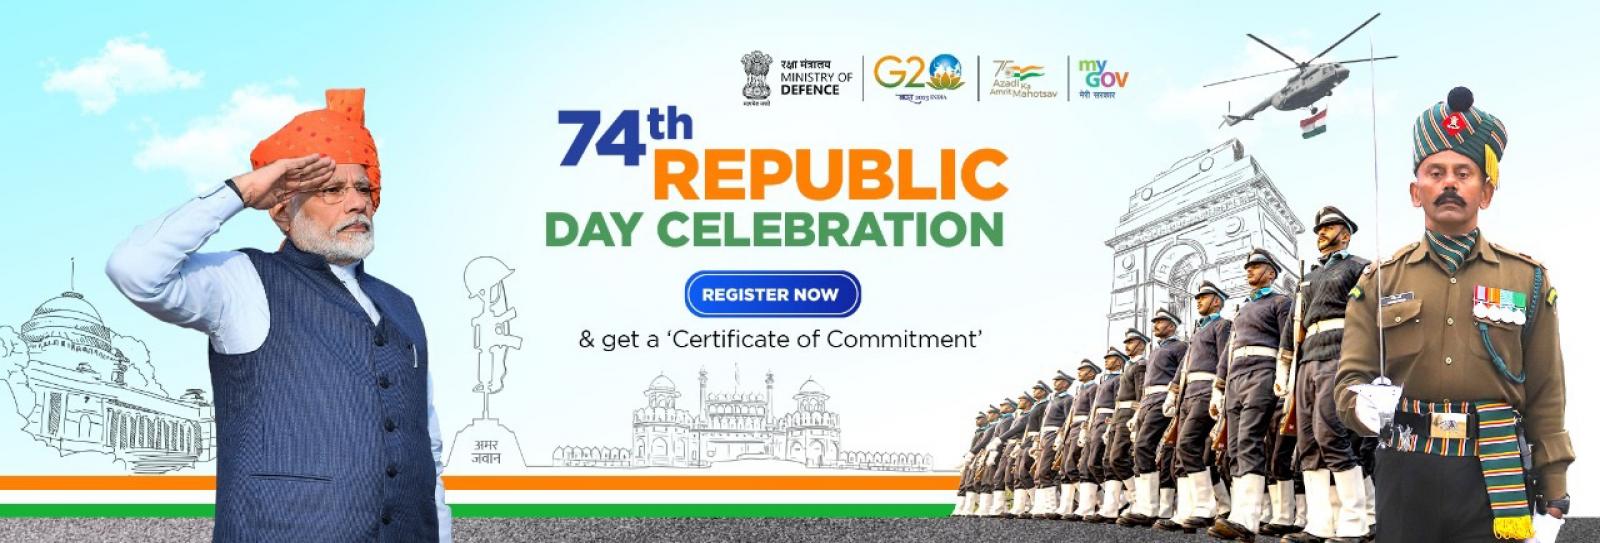 74th Republic Day Celebration